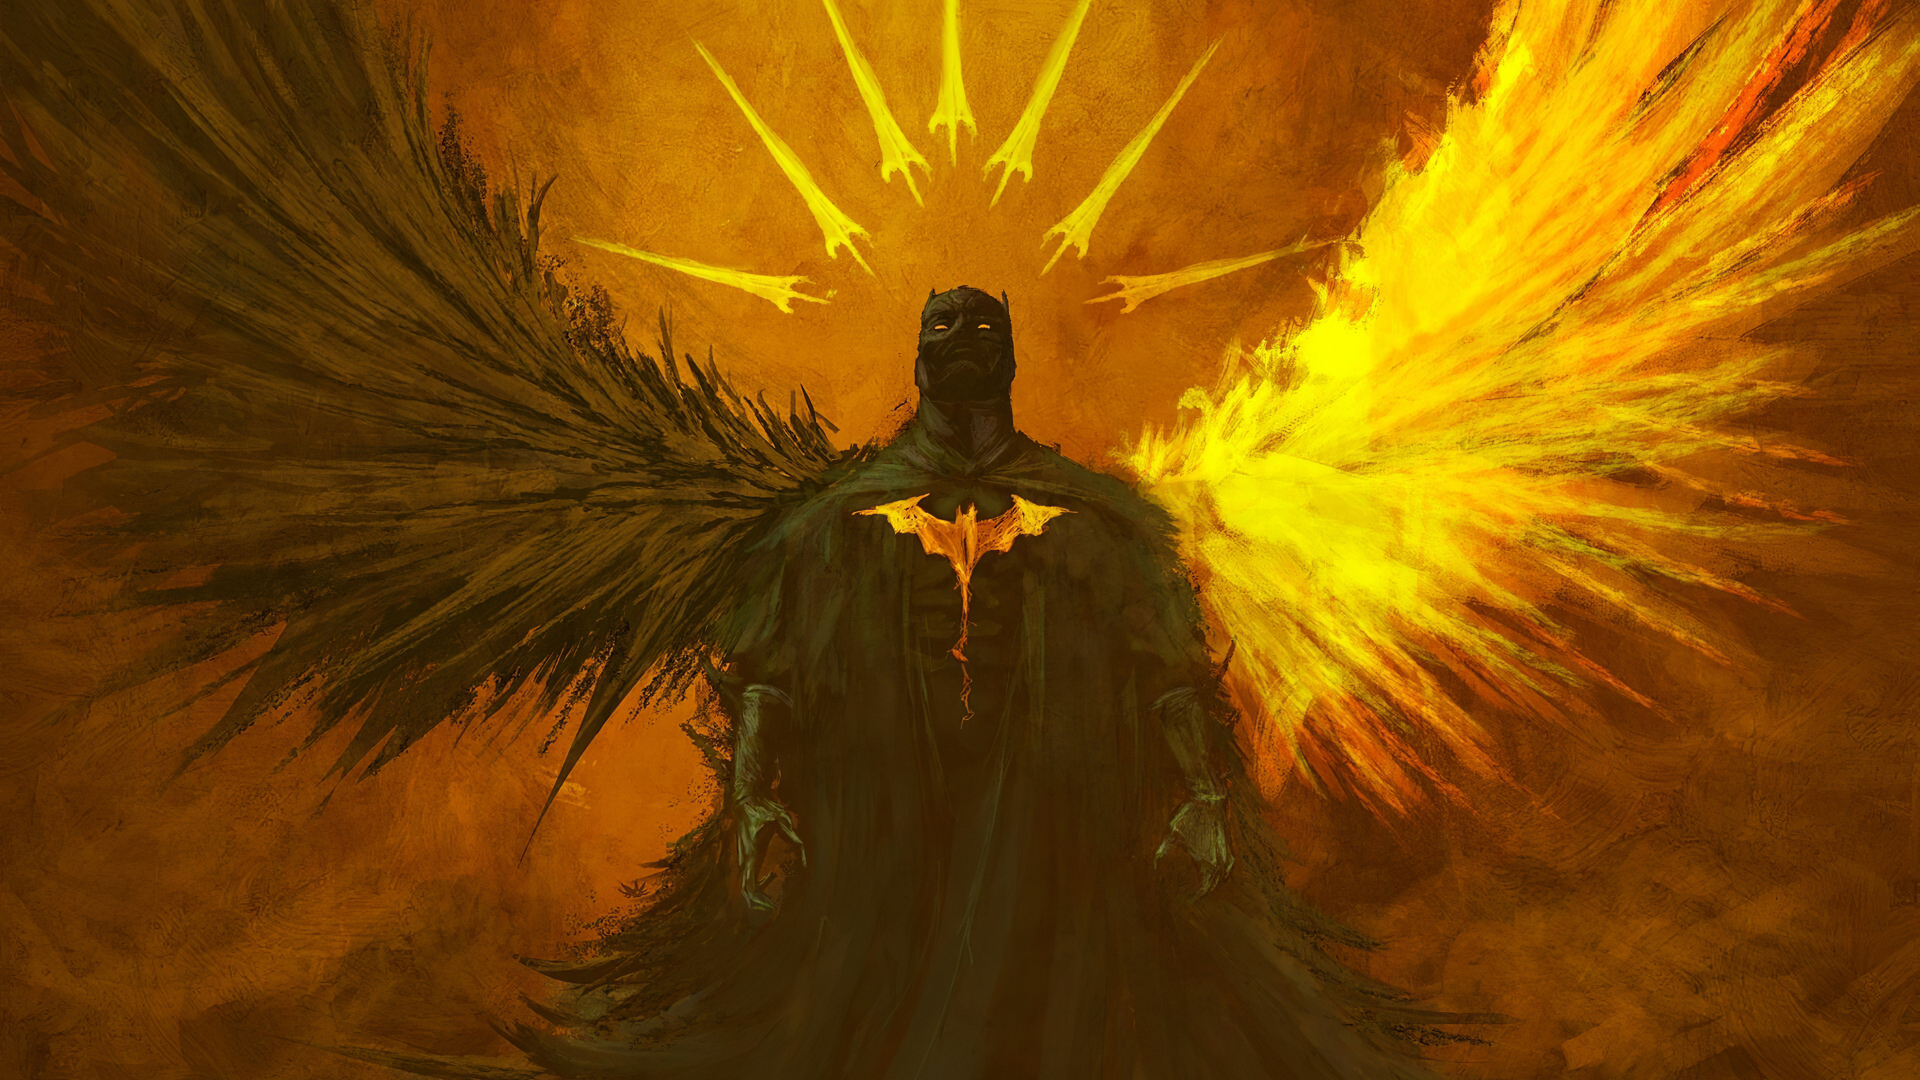 Batman, angel, wings of darkness and good, art, 1920x1080 wallpaper